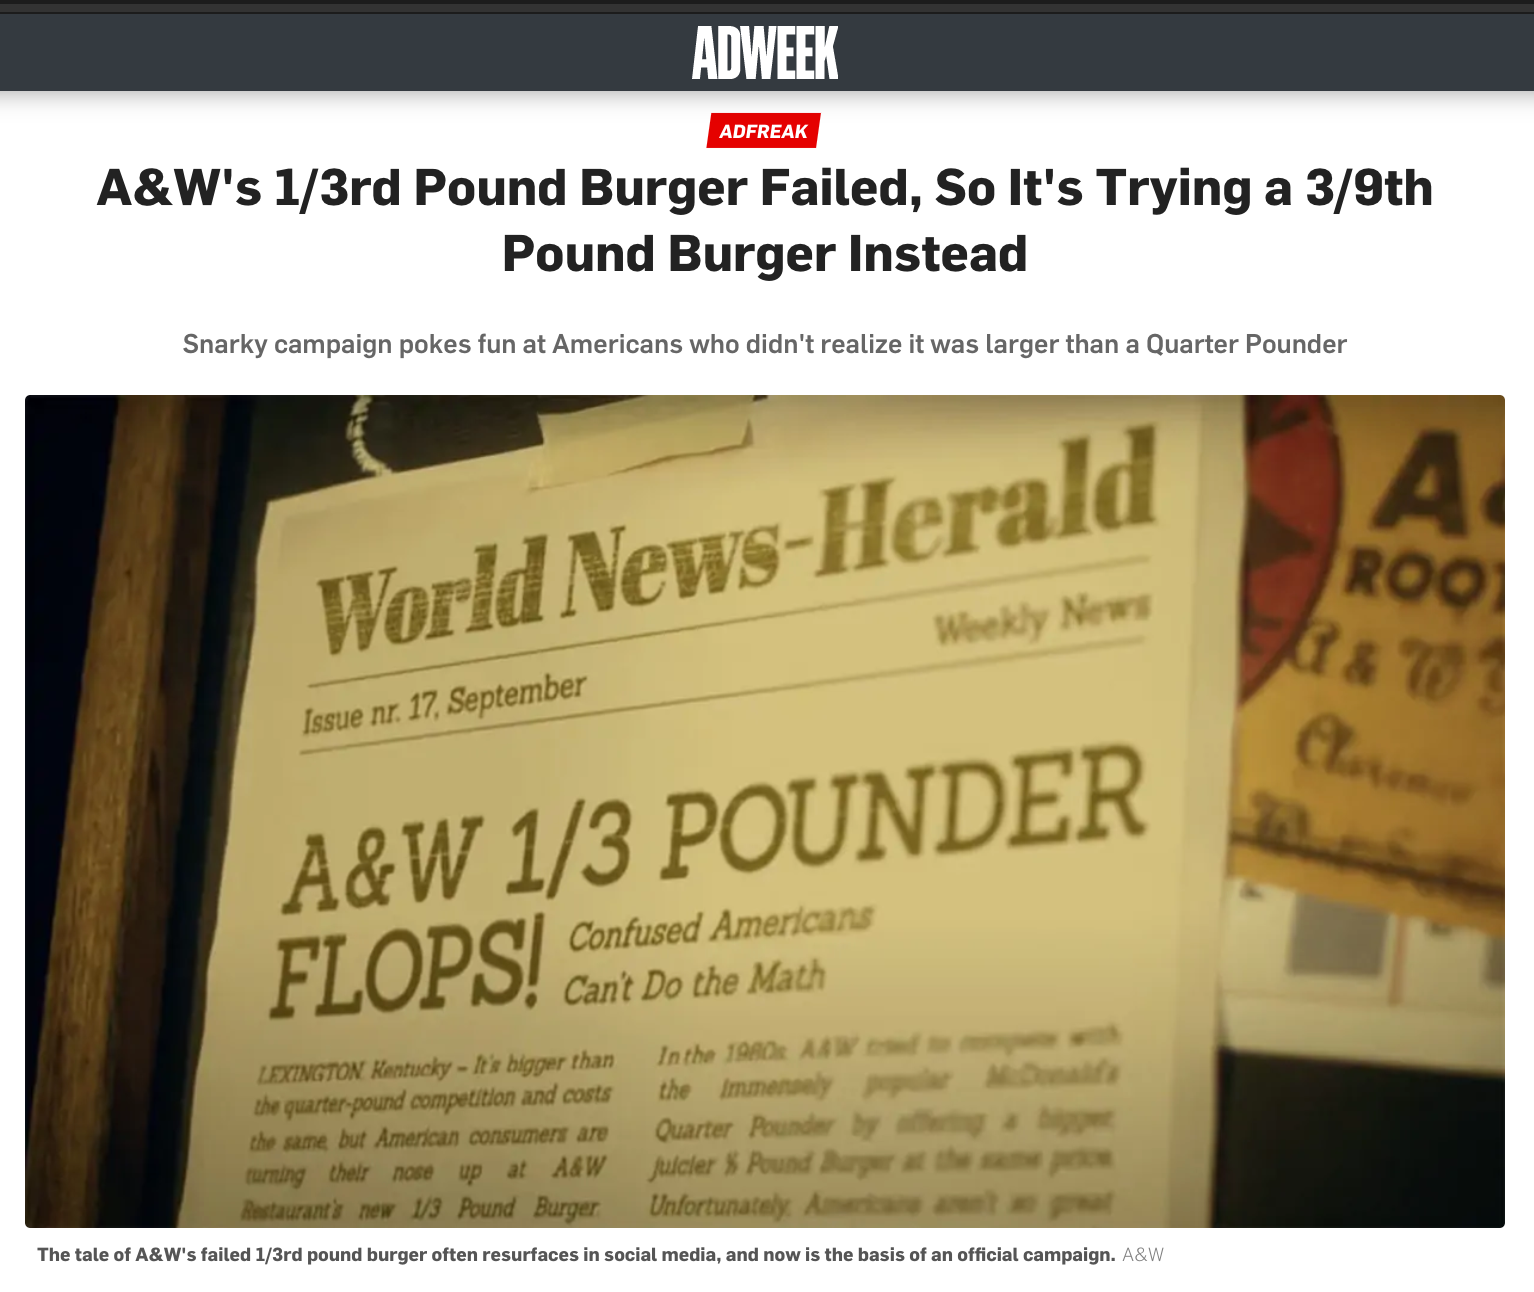 The A&W 1/3 lb Burger failed